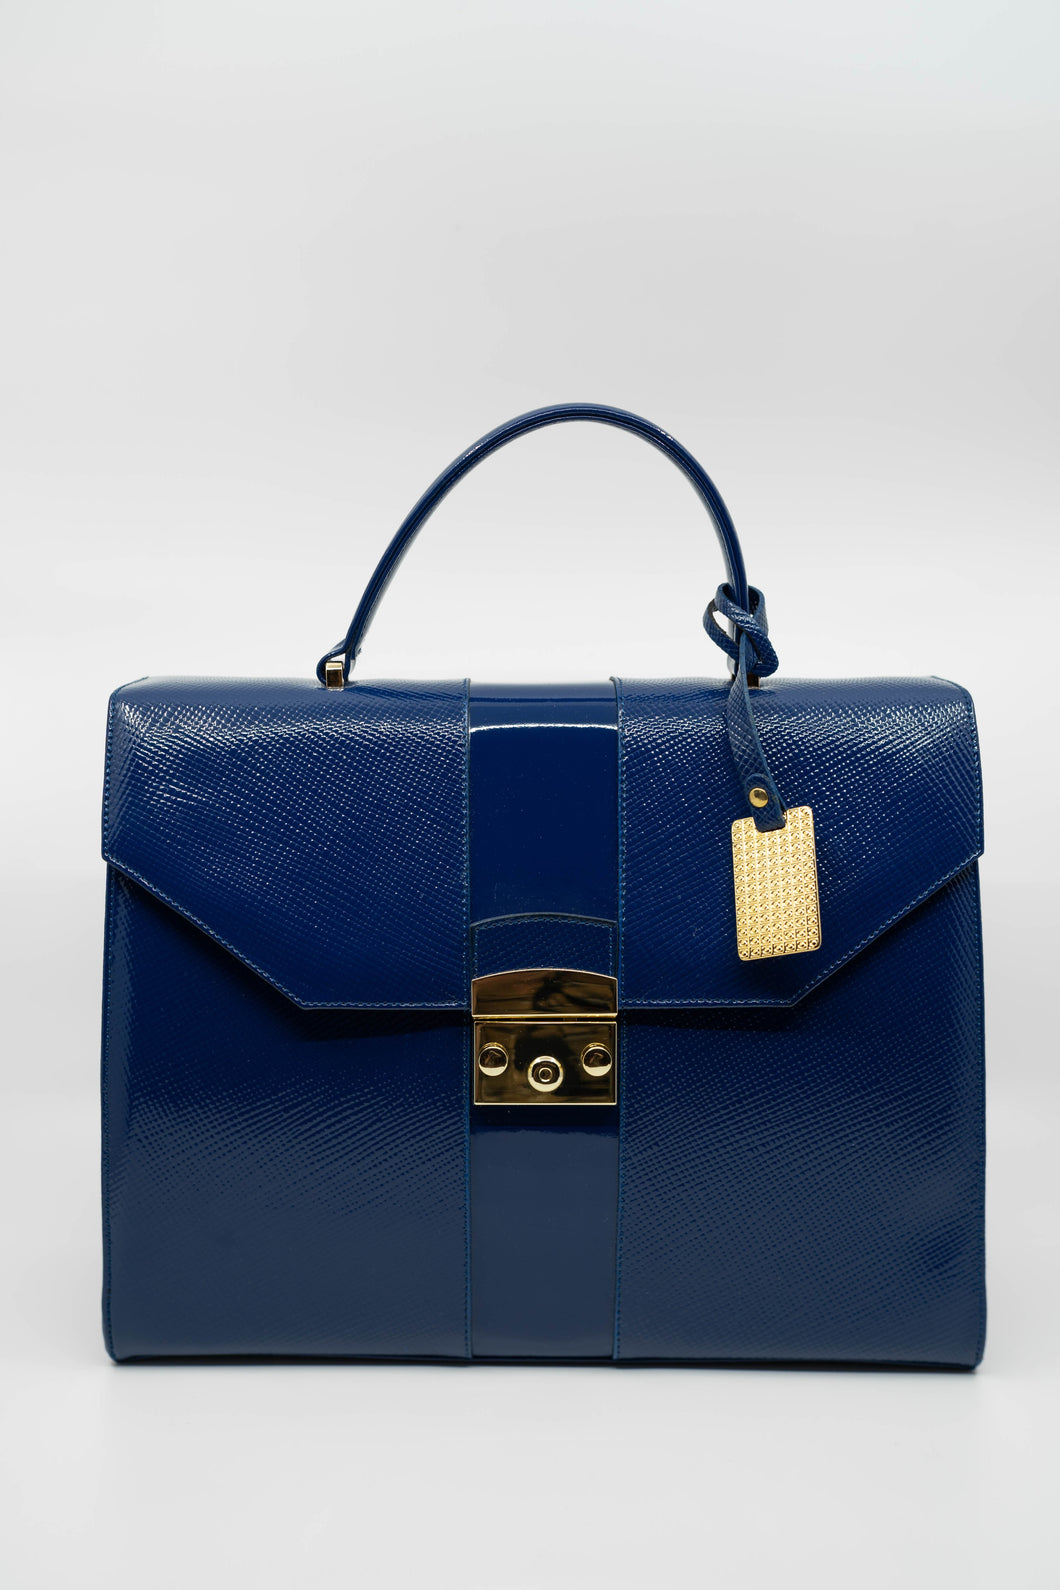 Giordano Handbag in Patent Leather